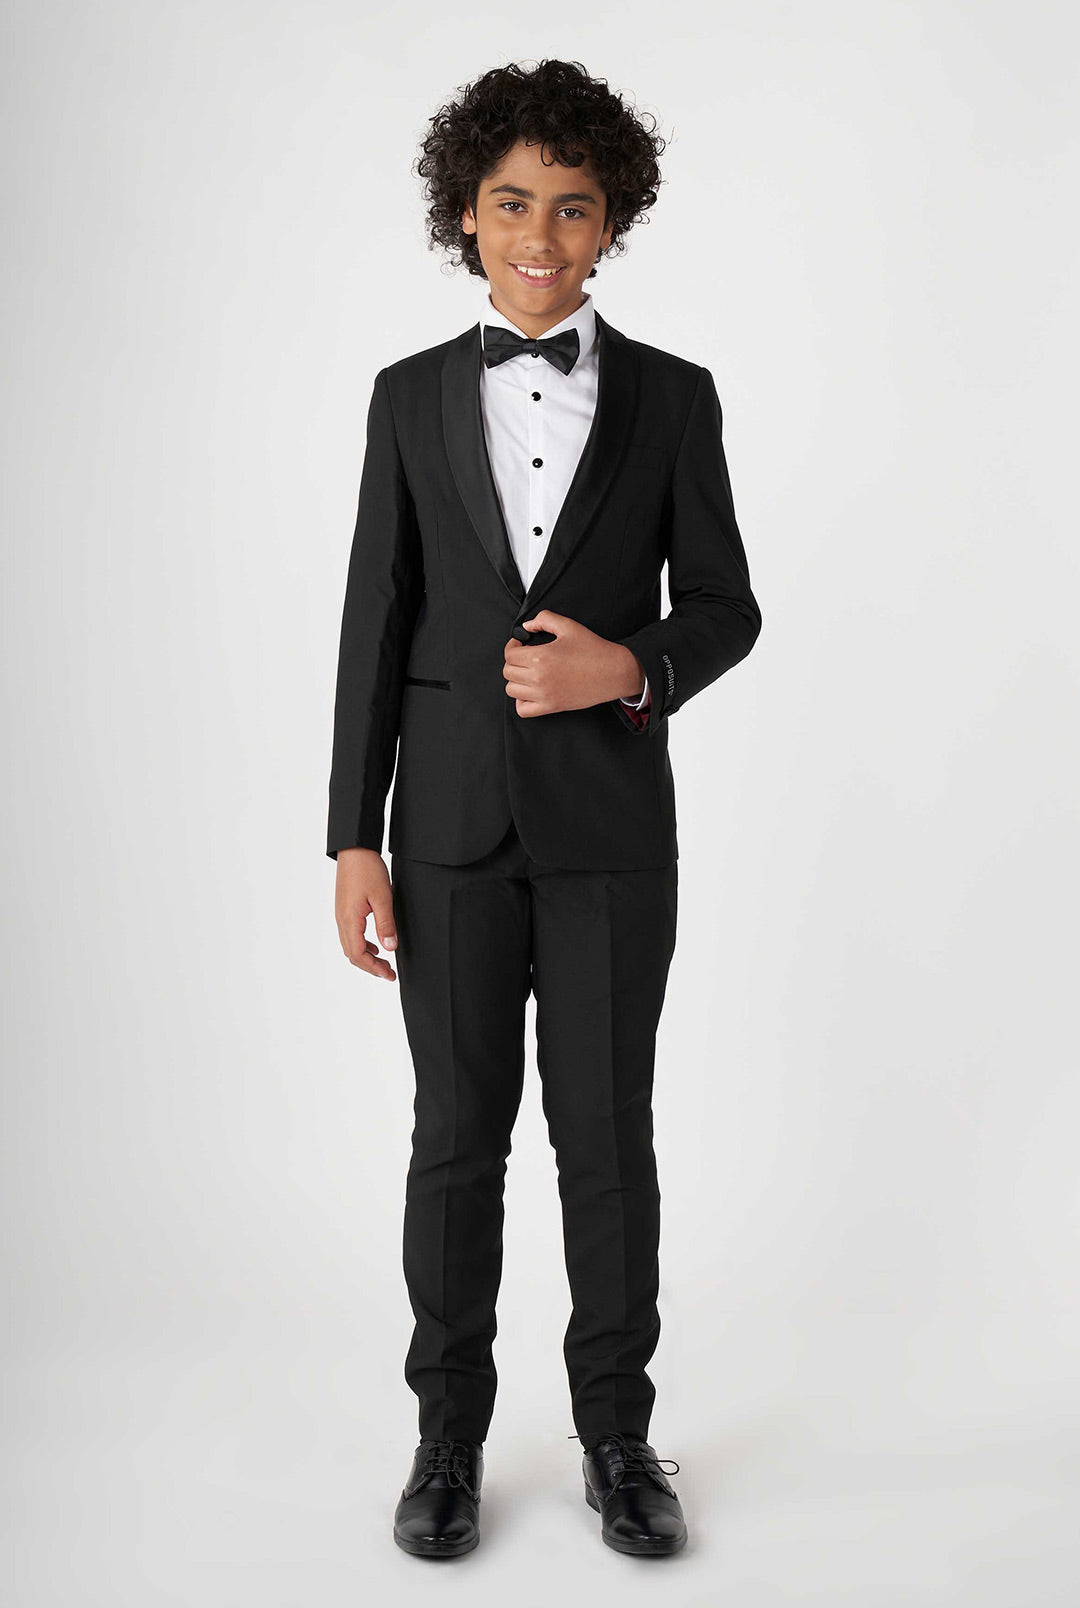 Boy's Tuxedos & Suits - Tuxedo Rental for Kids